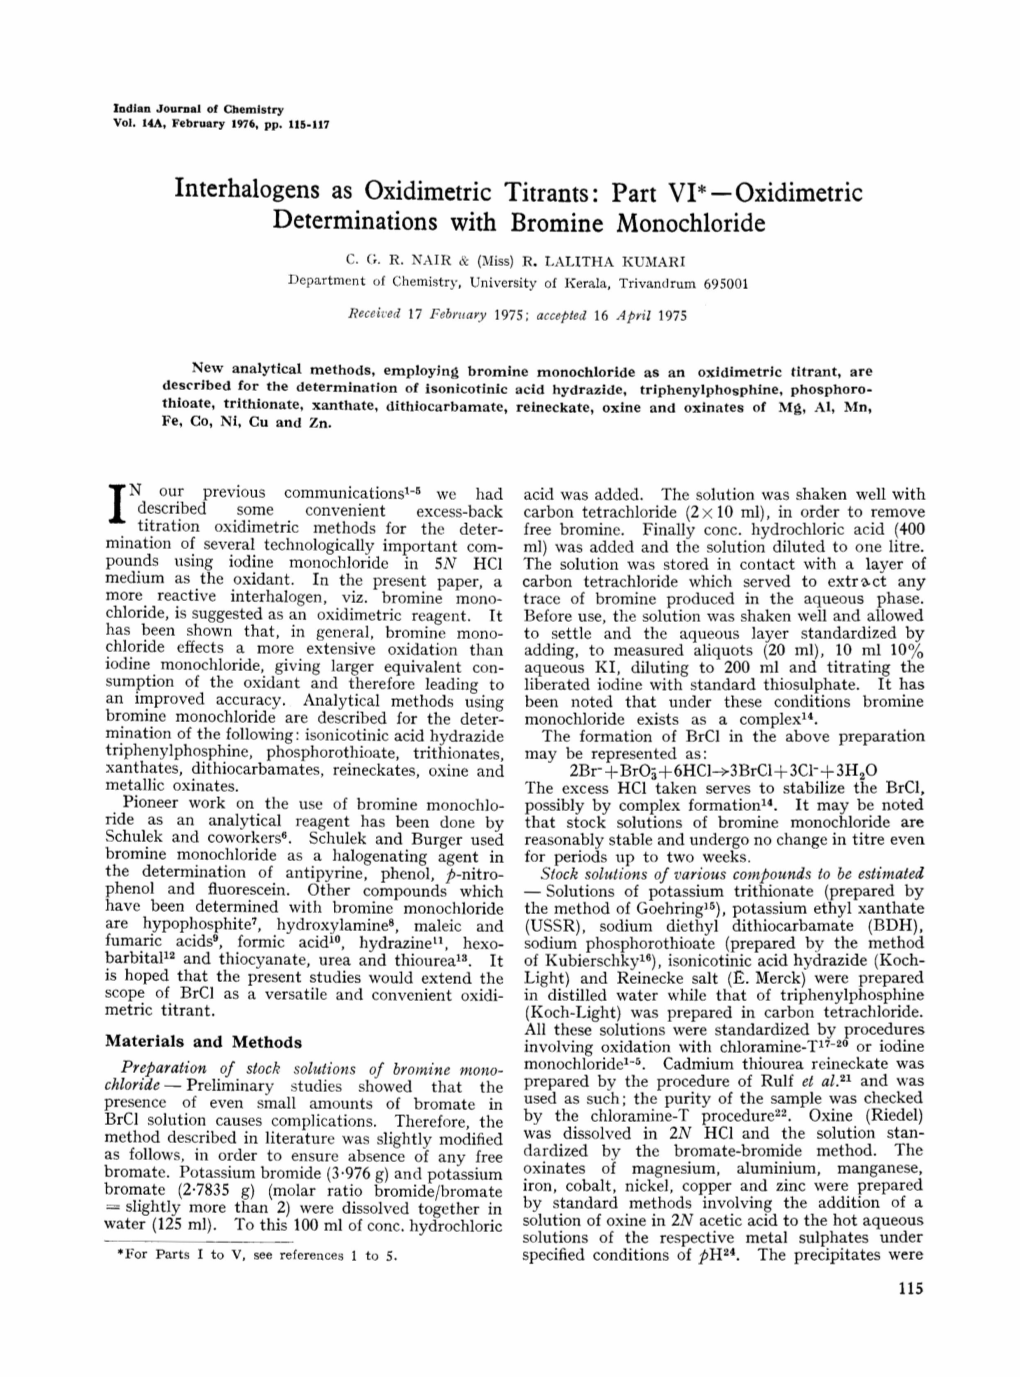 Oxidimetric Determinations with Bromine Monochloride